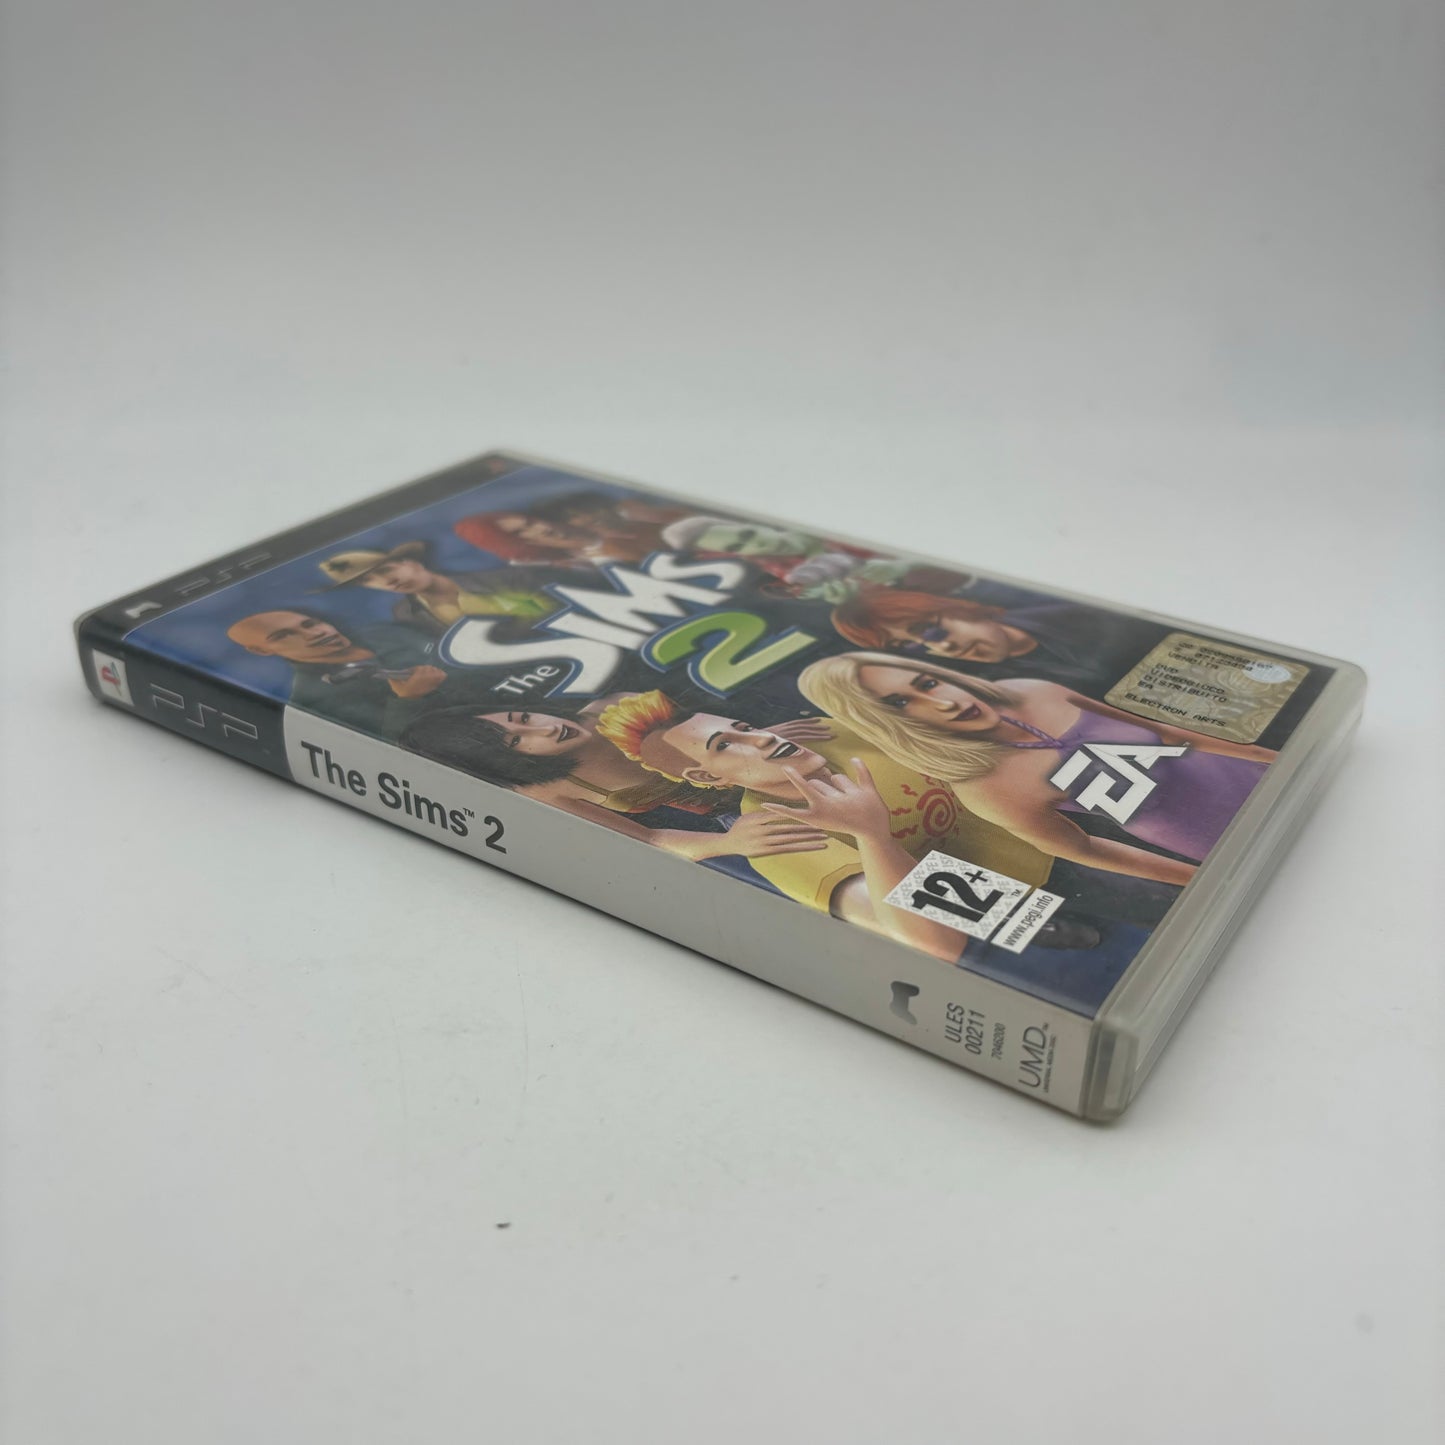 The Sims 2 Sony PSP PAL ITA (USATO)